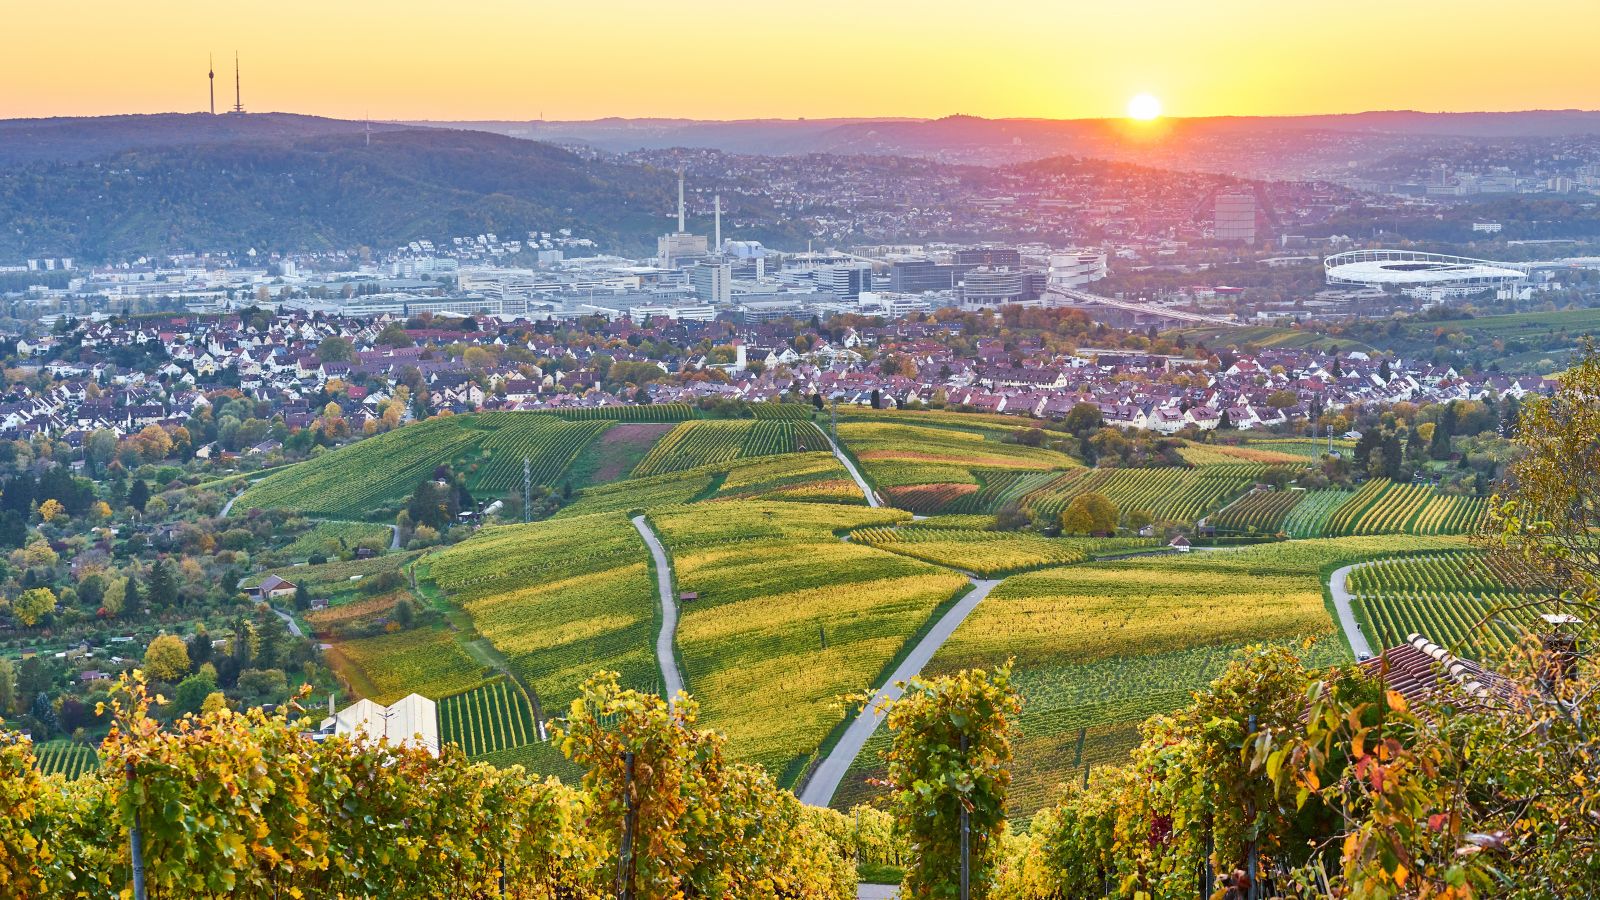 Neckar Velley in Stuttgart / colourful wine growing region in the south of Germany